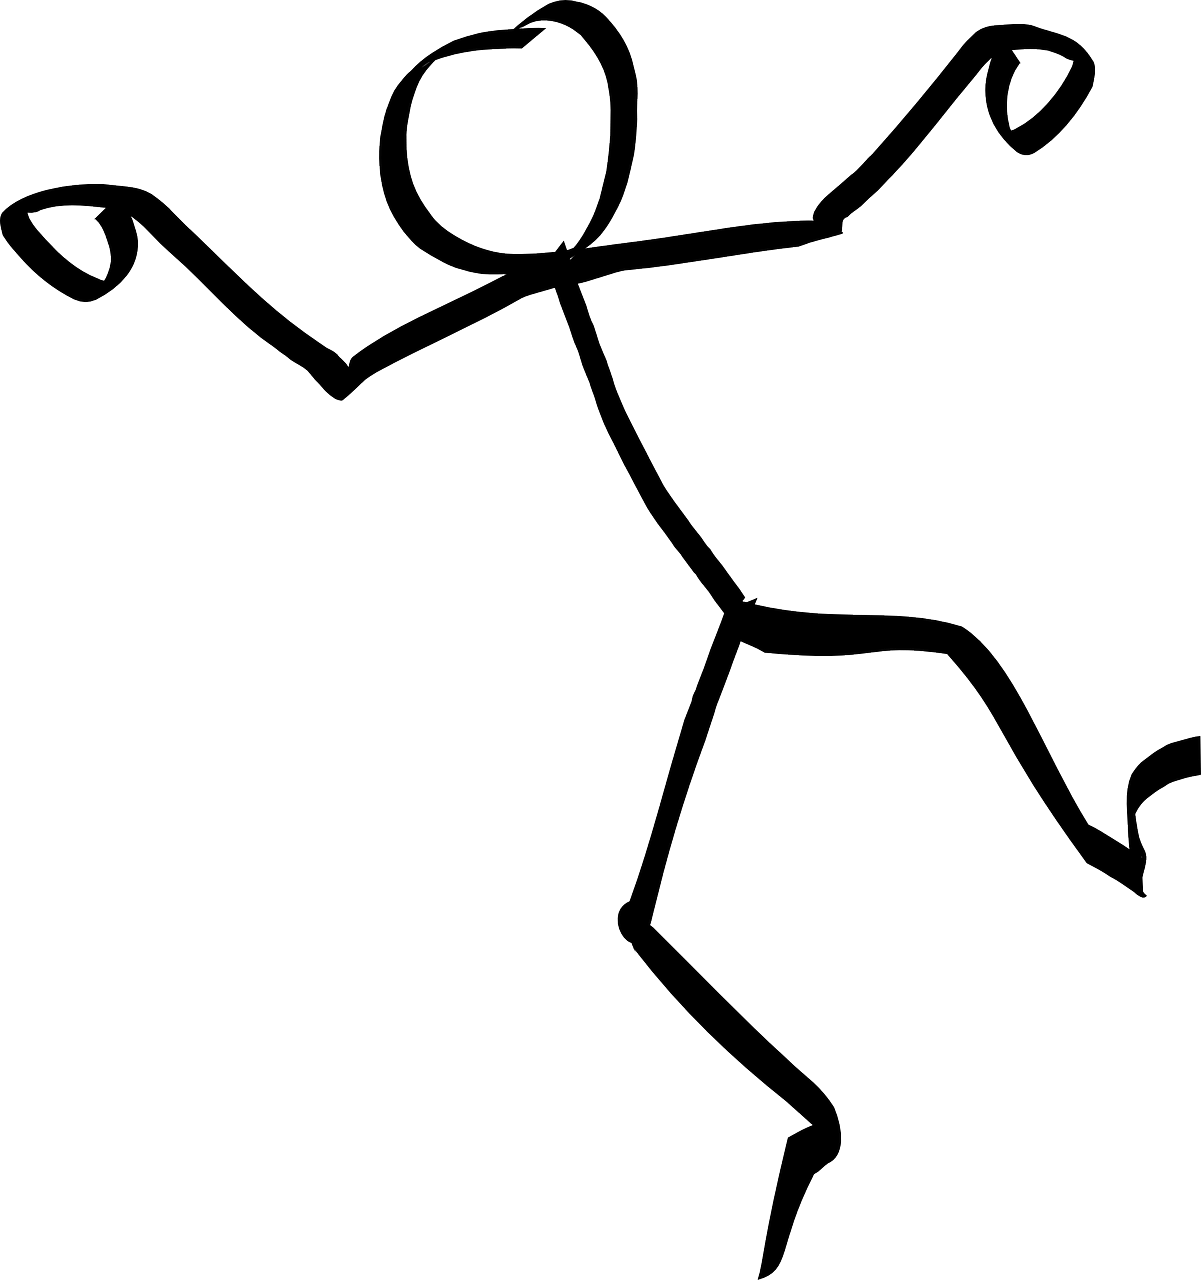 Dancing Stick Figure - Of Stick Figures, Transparent background PNG HD thumbnail